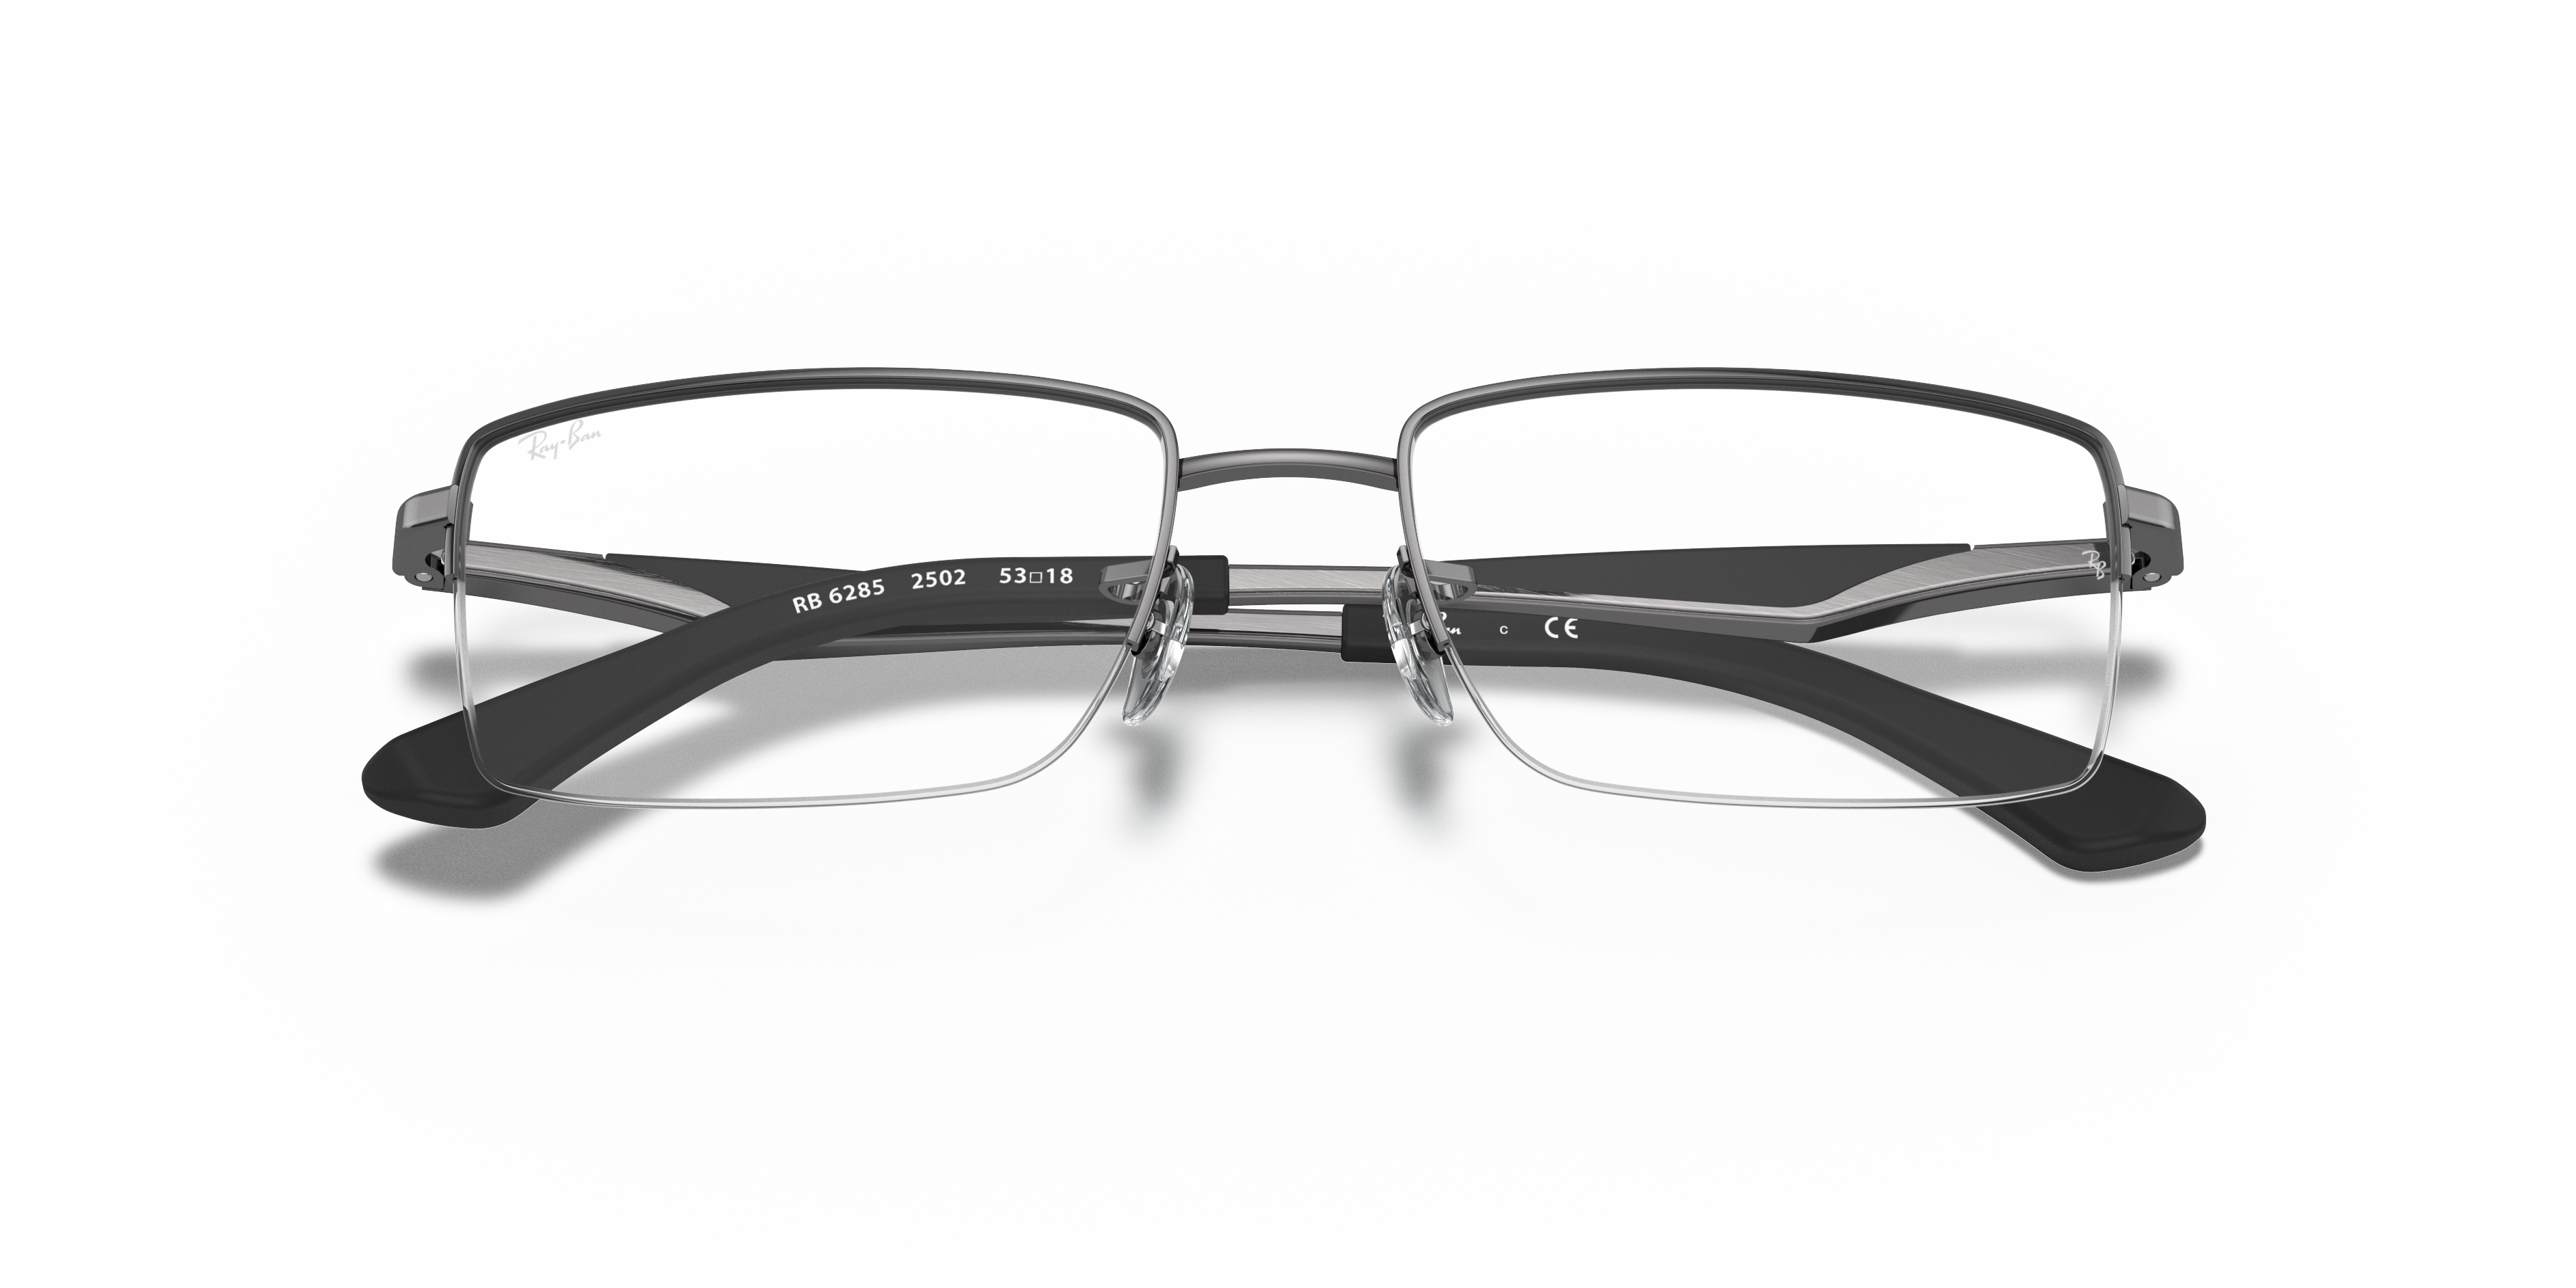 Rb6285 Eyeglasses with Gunmetal Frame | Ray-Ban®